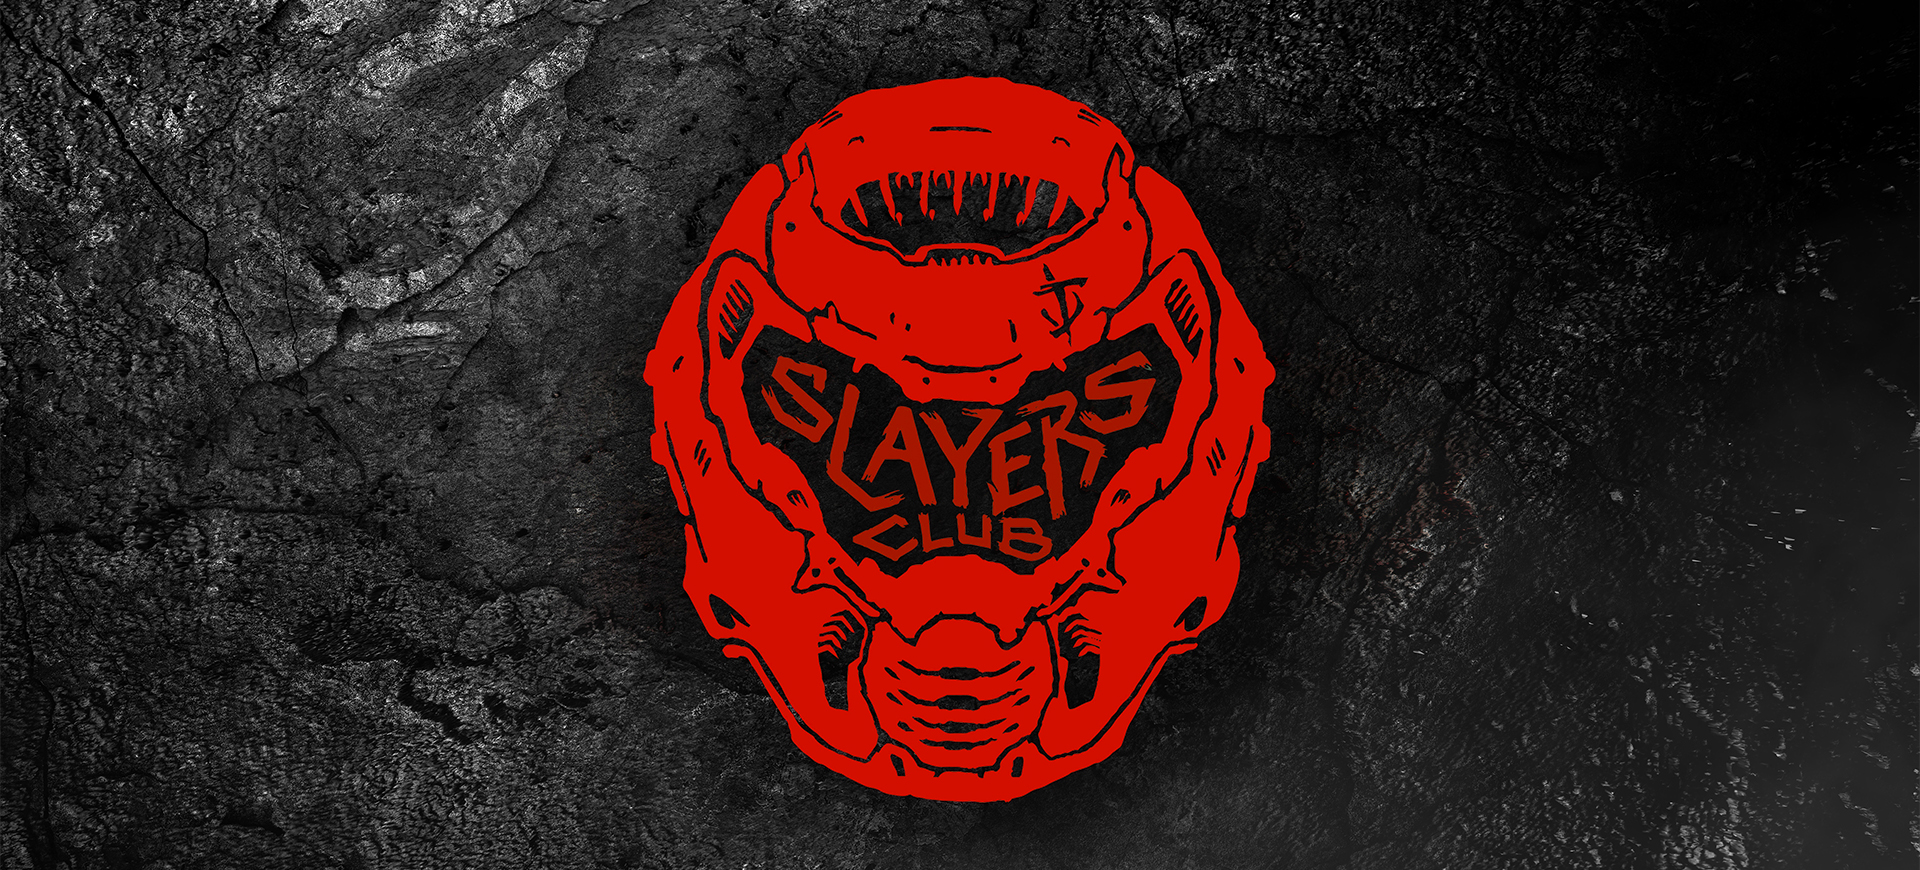 The Slayers Club will return in 2020!